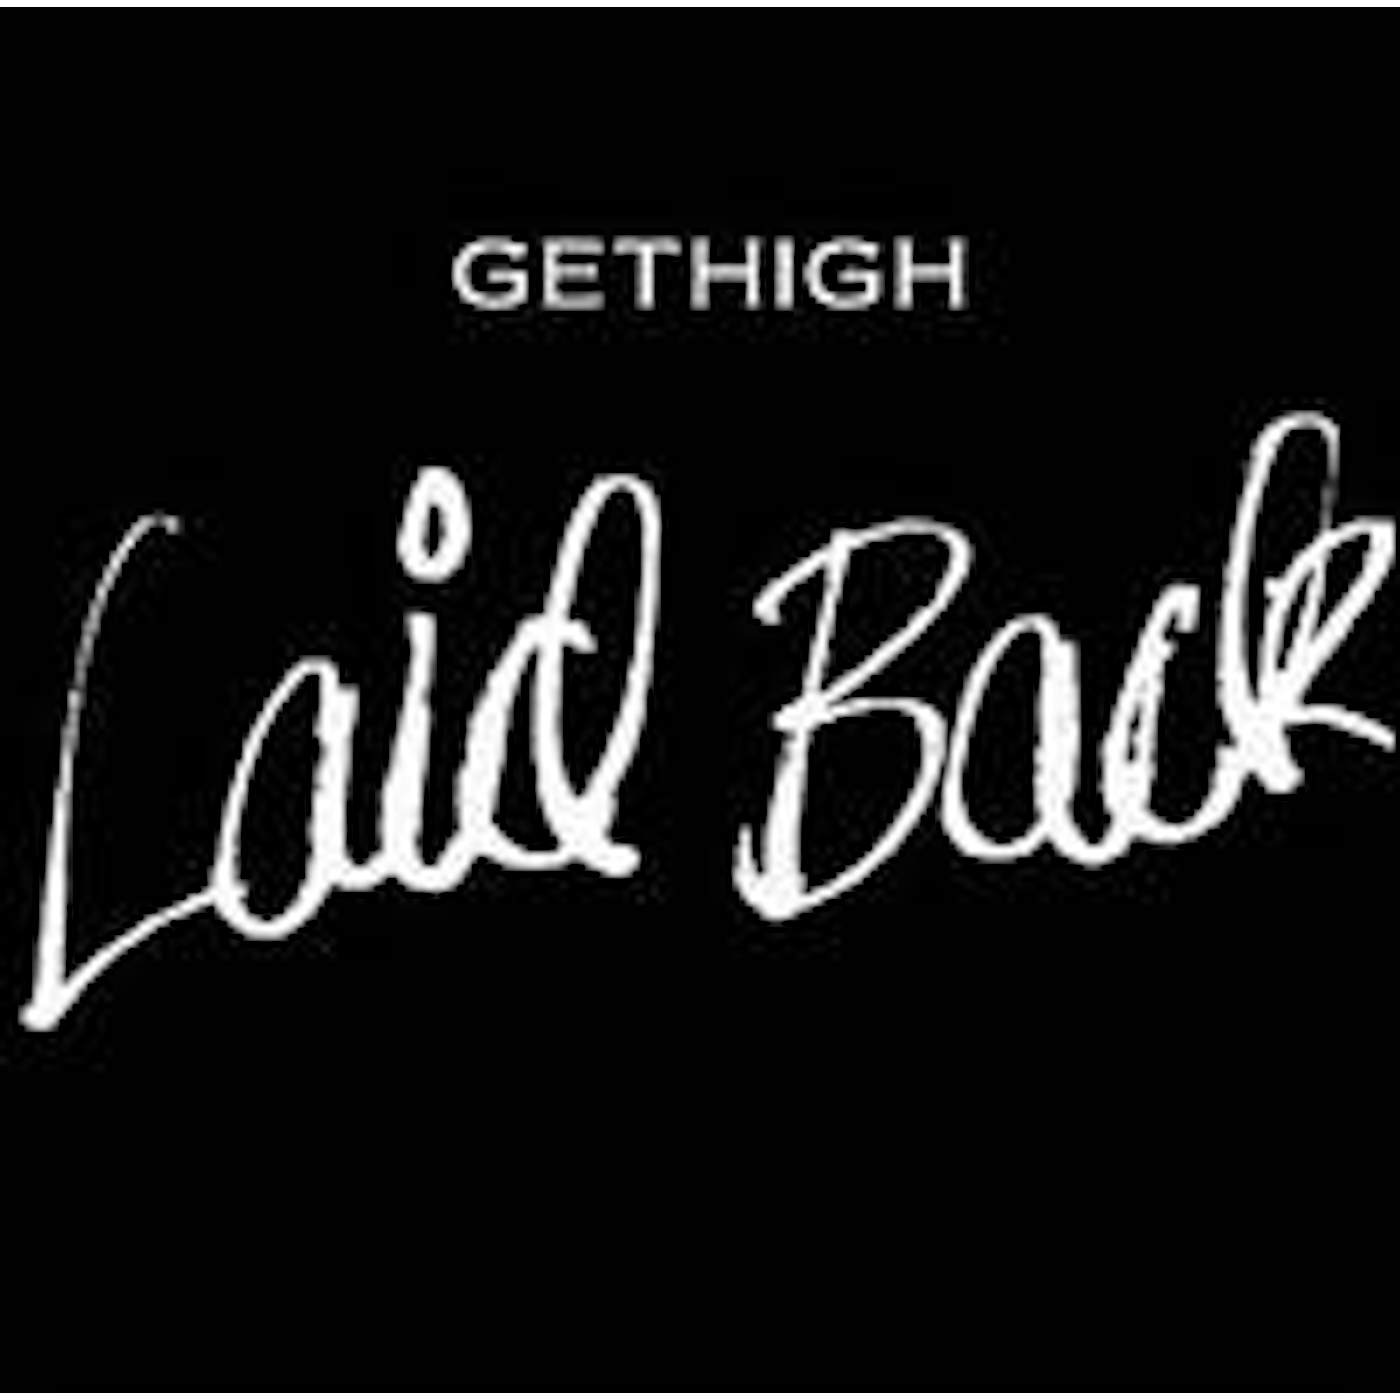 Laid Back GET HIGH Vinyl Record